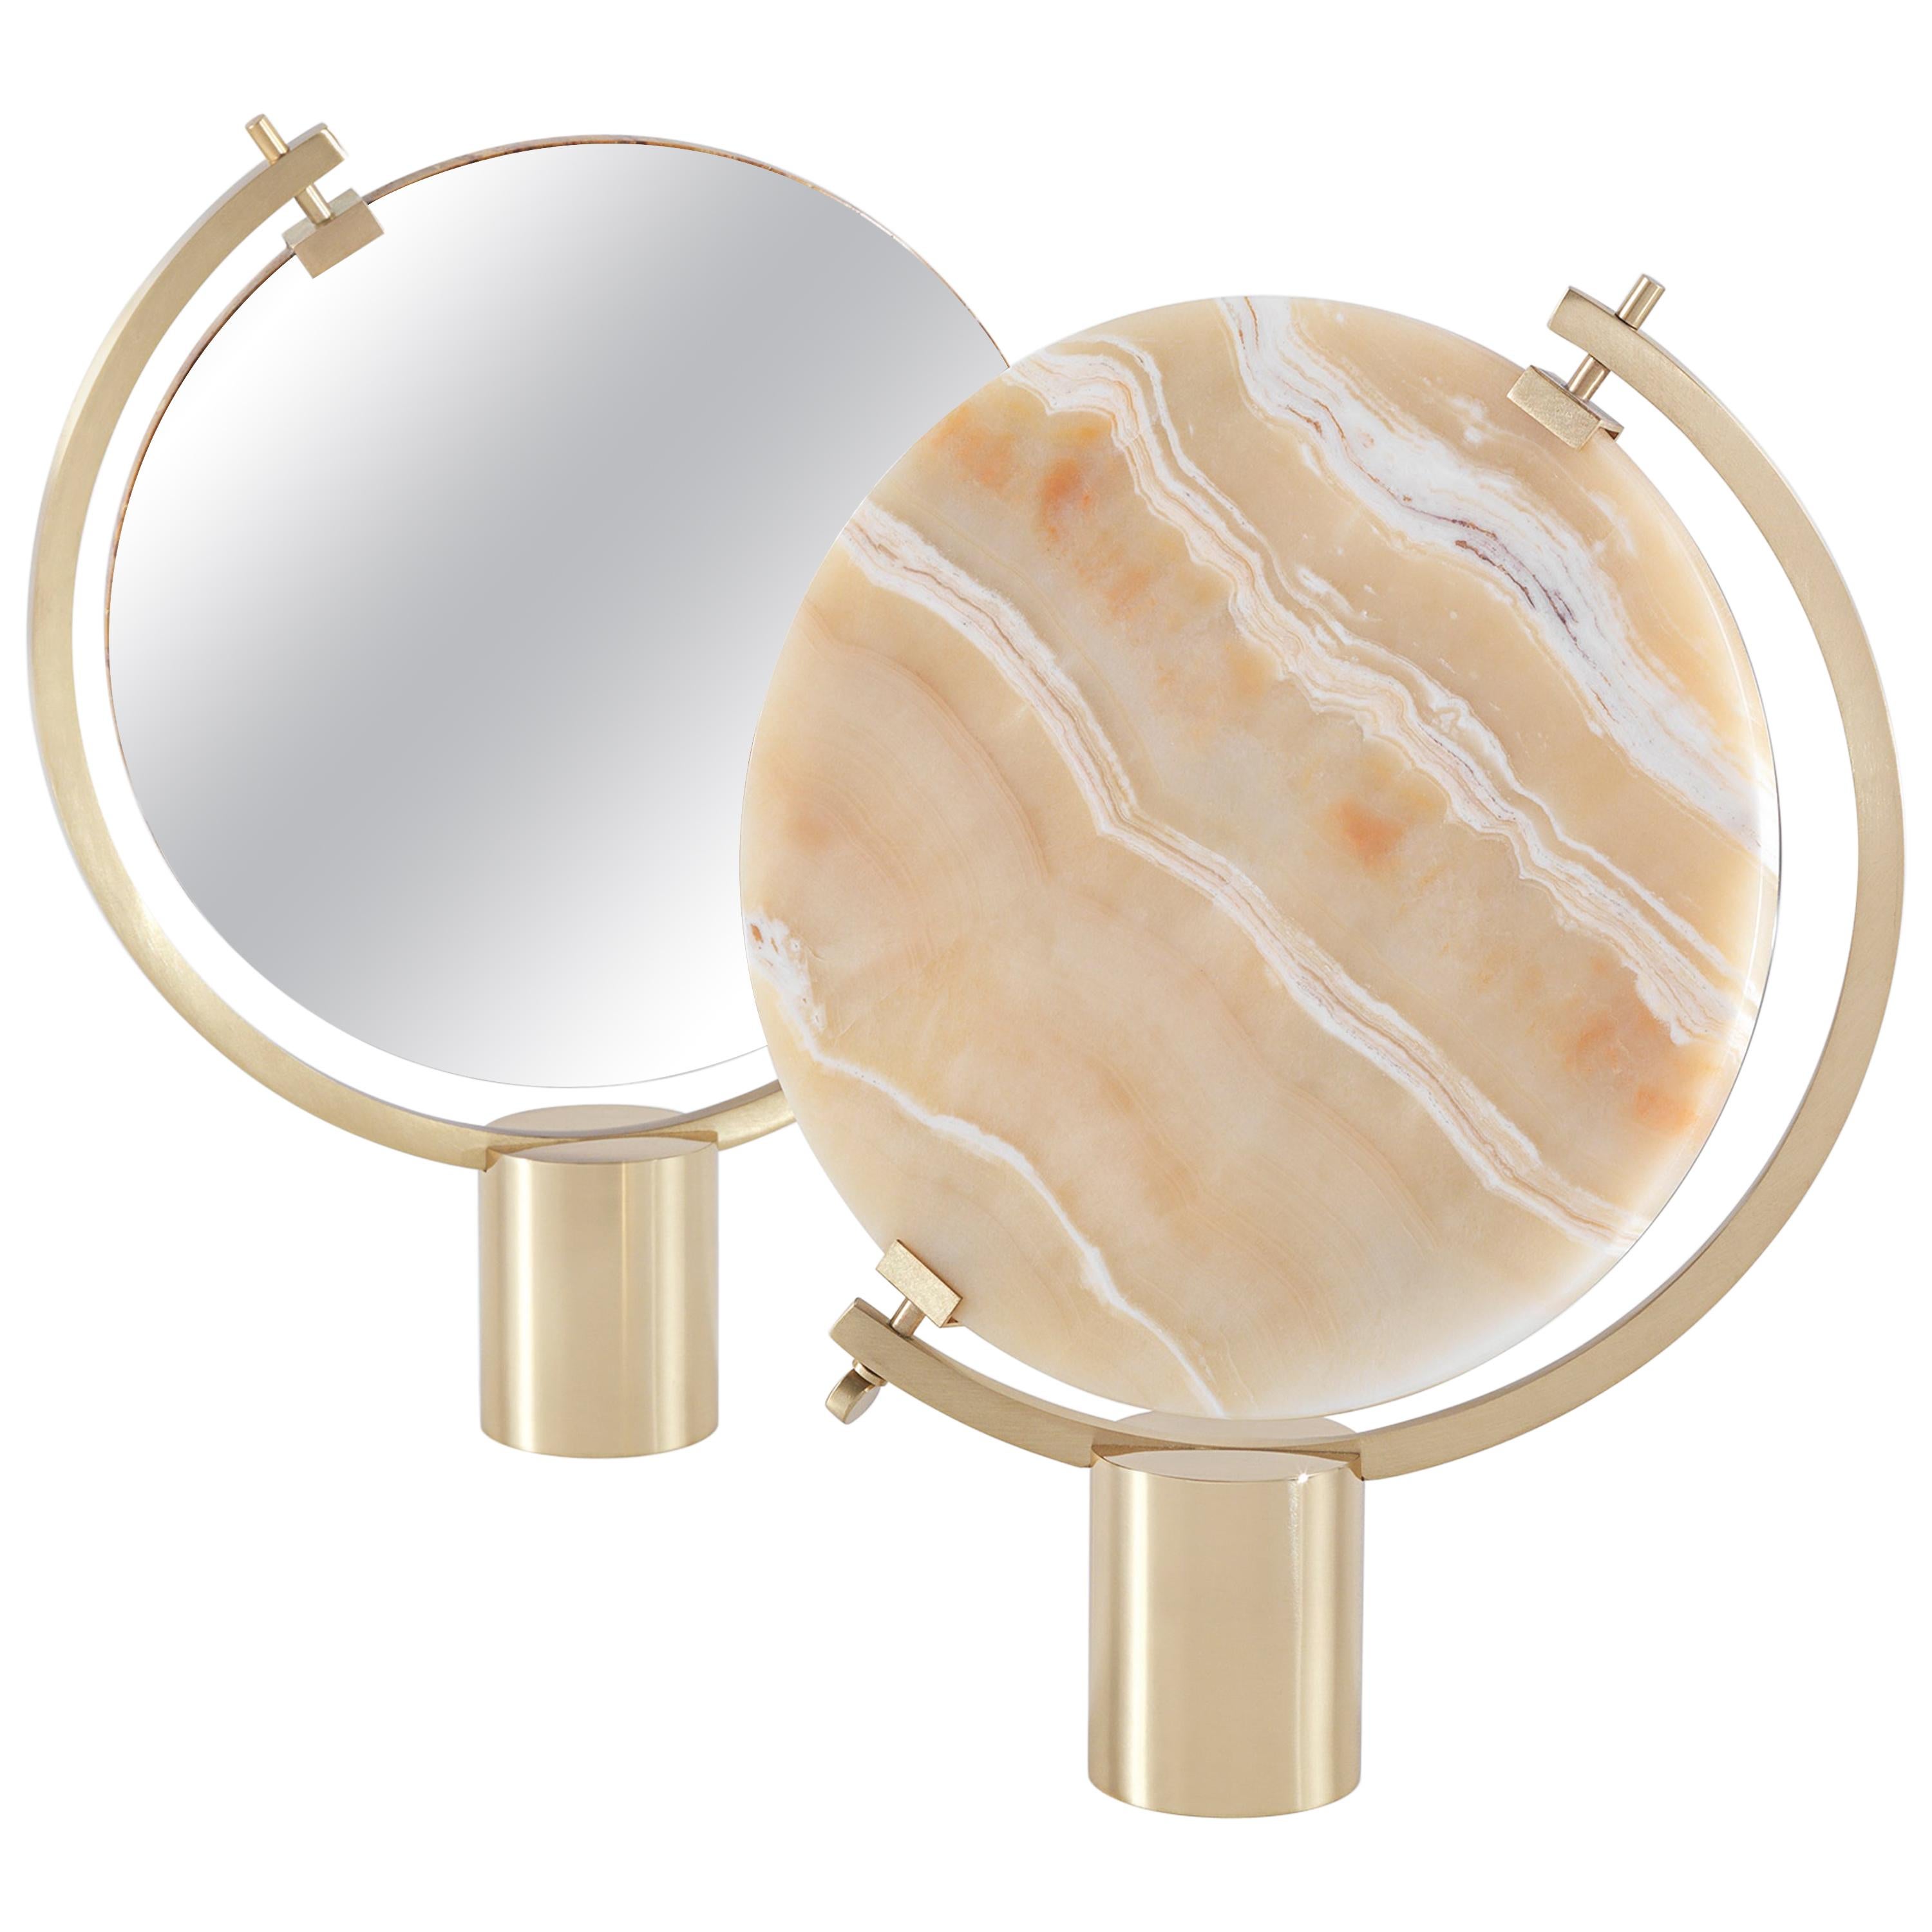 En vente : Beige (Honey Onyx) Miroir de table Naia du 21e siècle en marbre poli par CTRLZAK